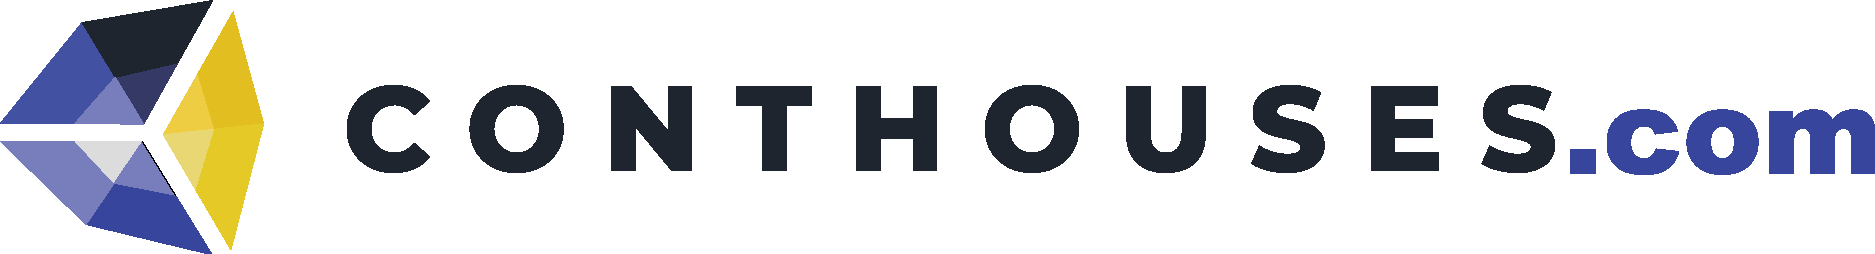 Conthouses Logo Vector